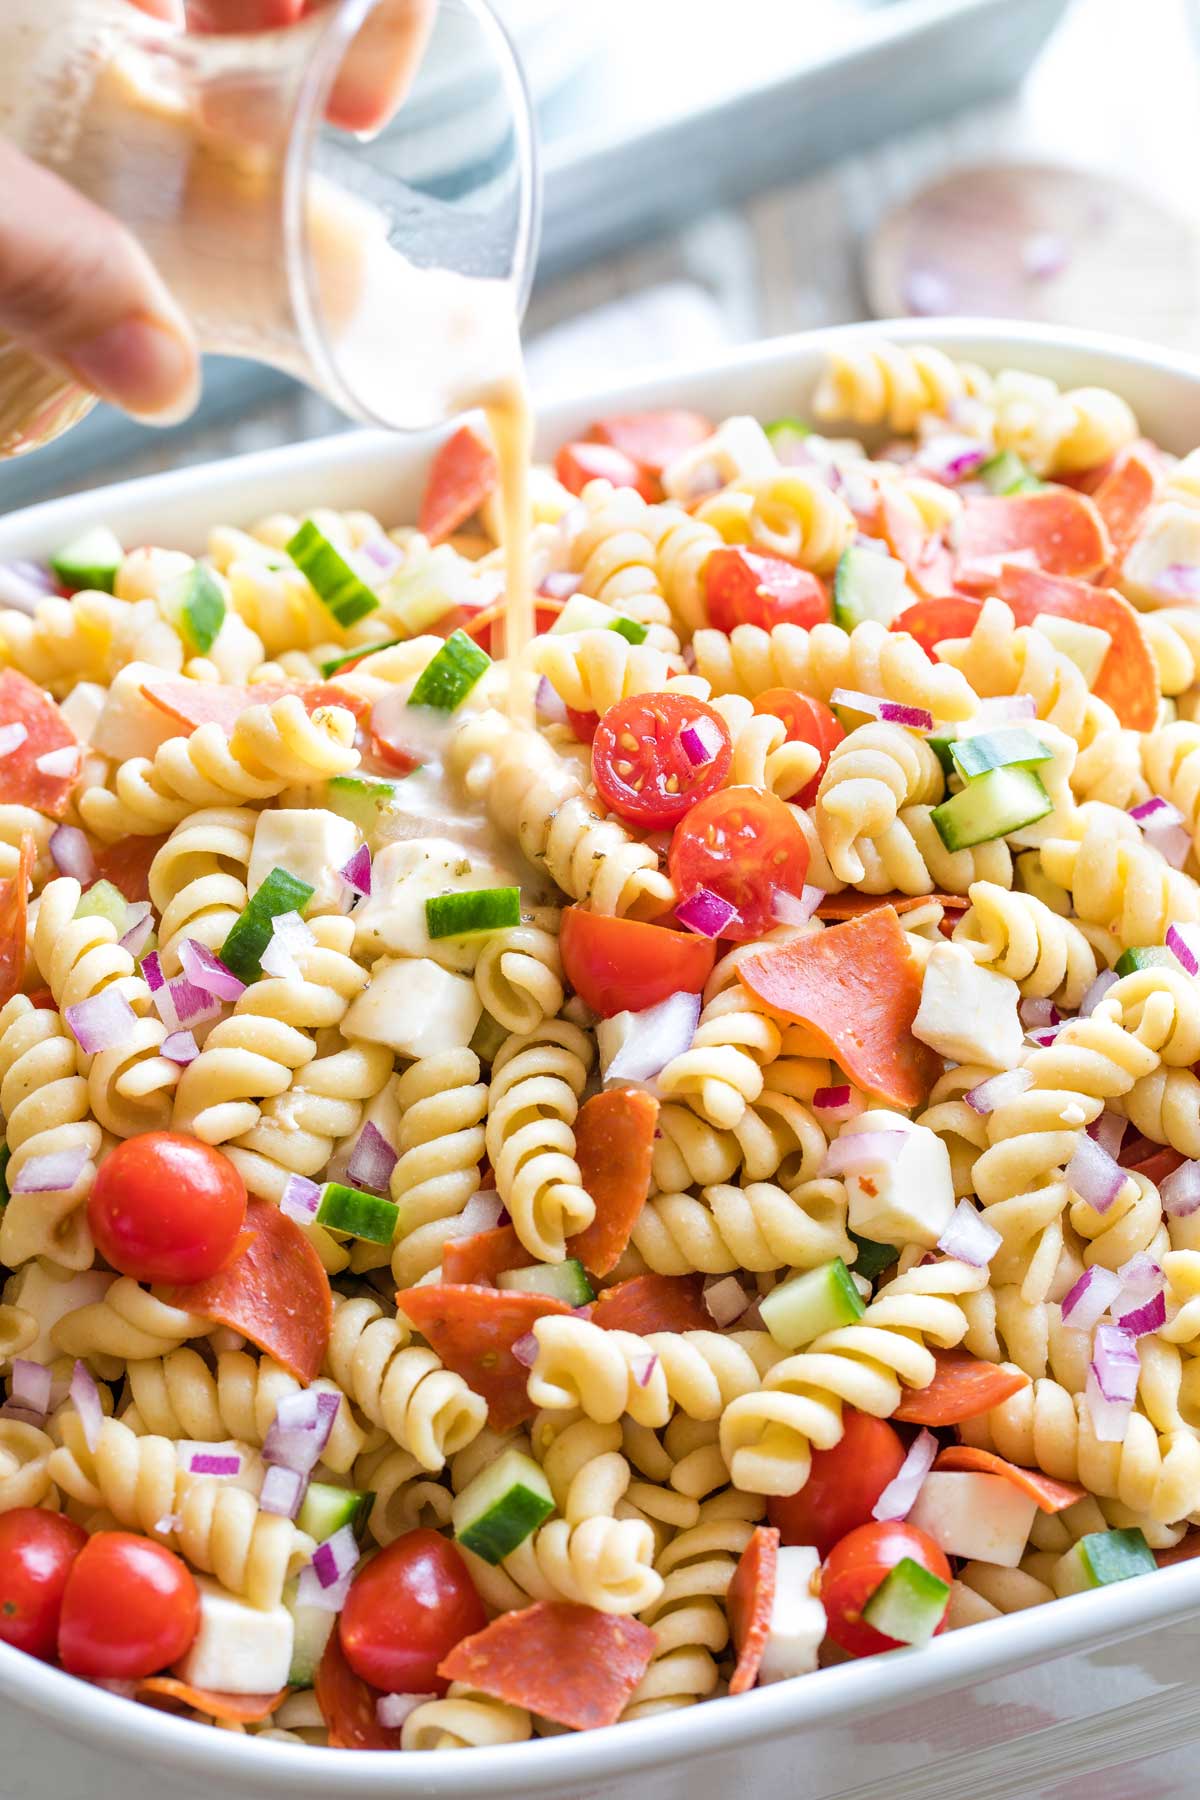 Hand pouring vinaigrette from dressing bottle onto large bowl of Italian pasta salad.